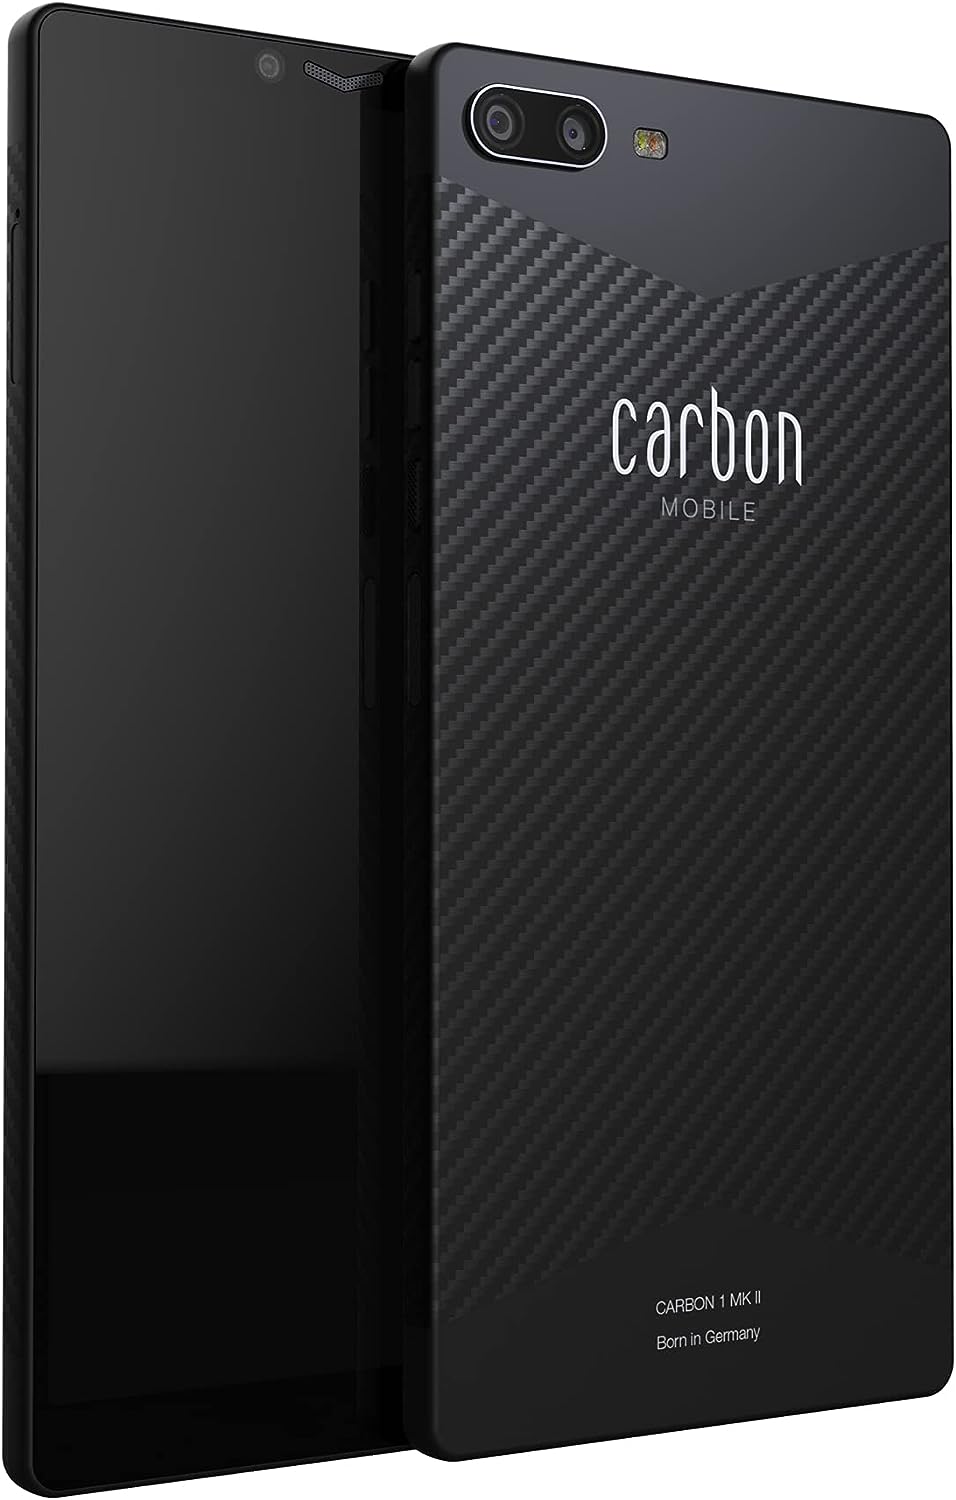 Carbon Mobile 1 MK II